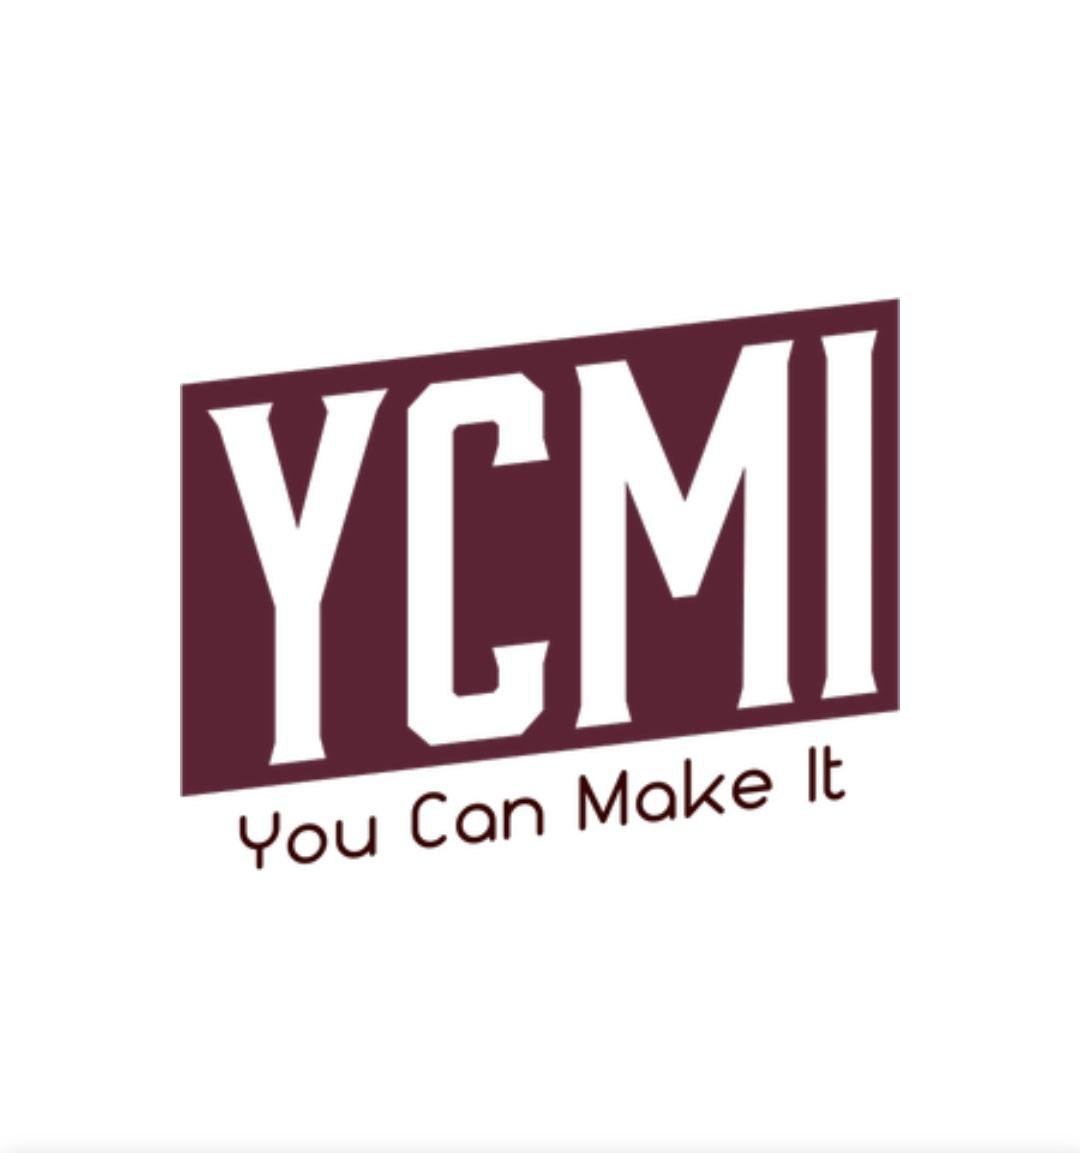 YCMI Janitorial Service LLC